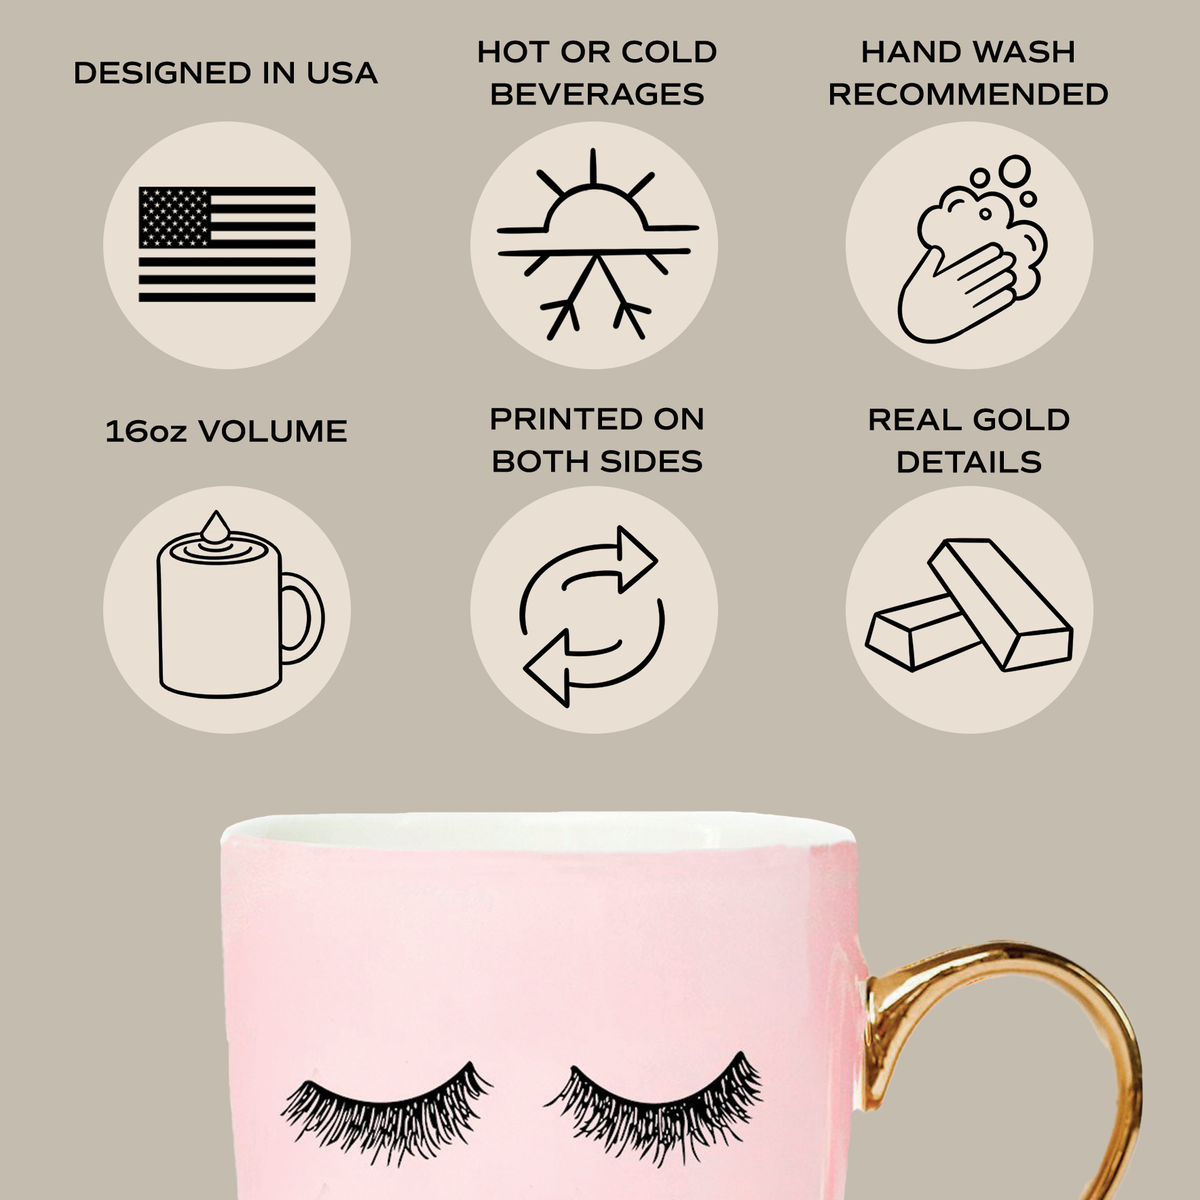 Eyelashes Coffee Mug - Gifts & Home Decor